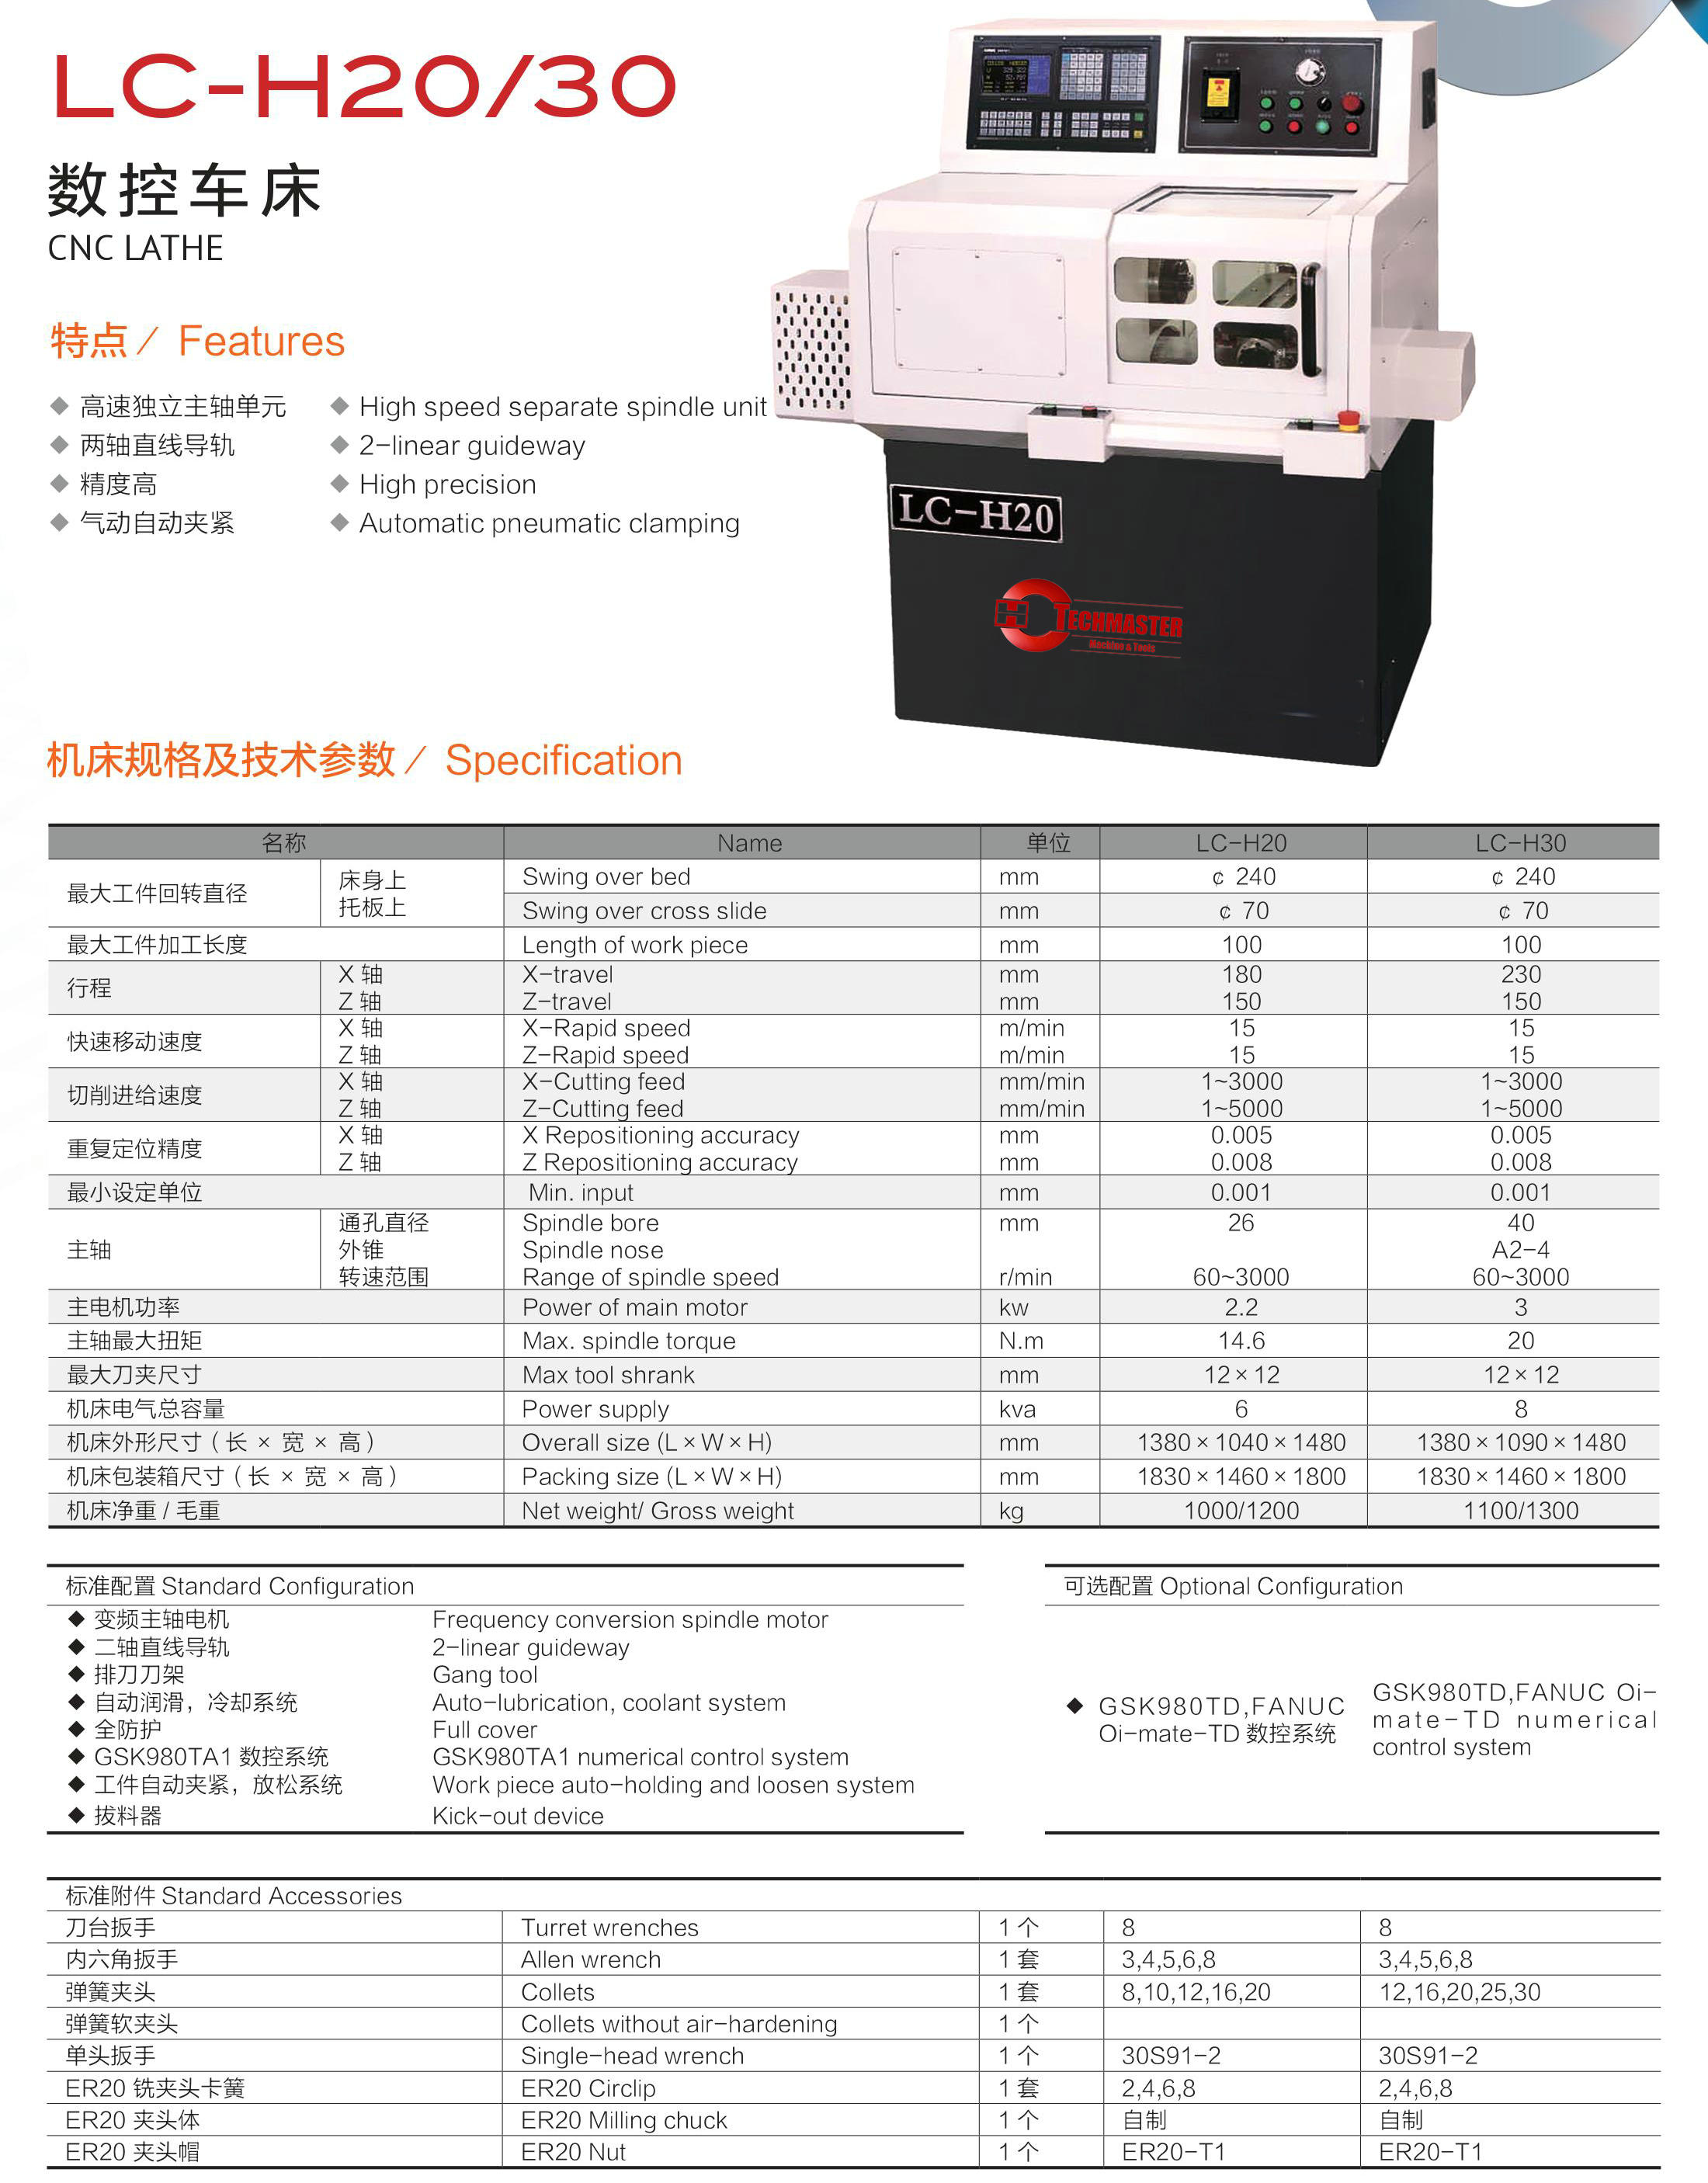 CNC Lathe LC-H20/30